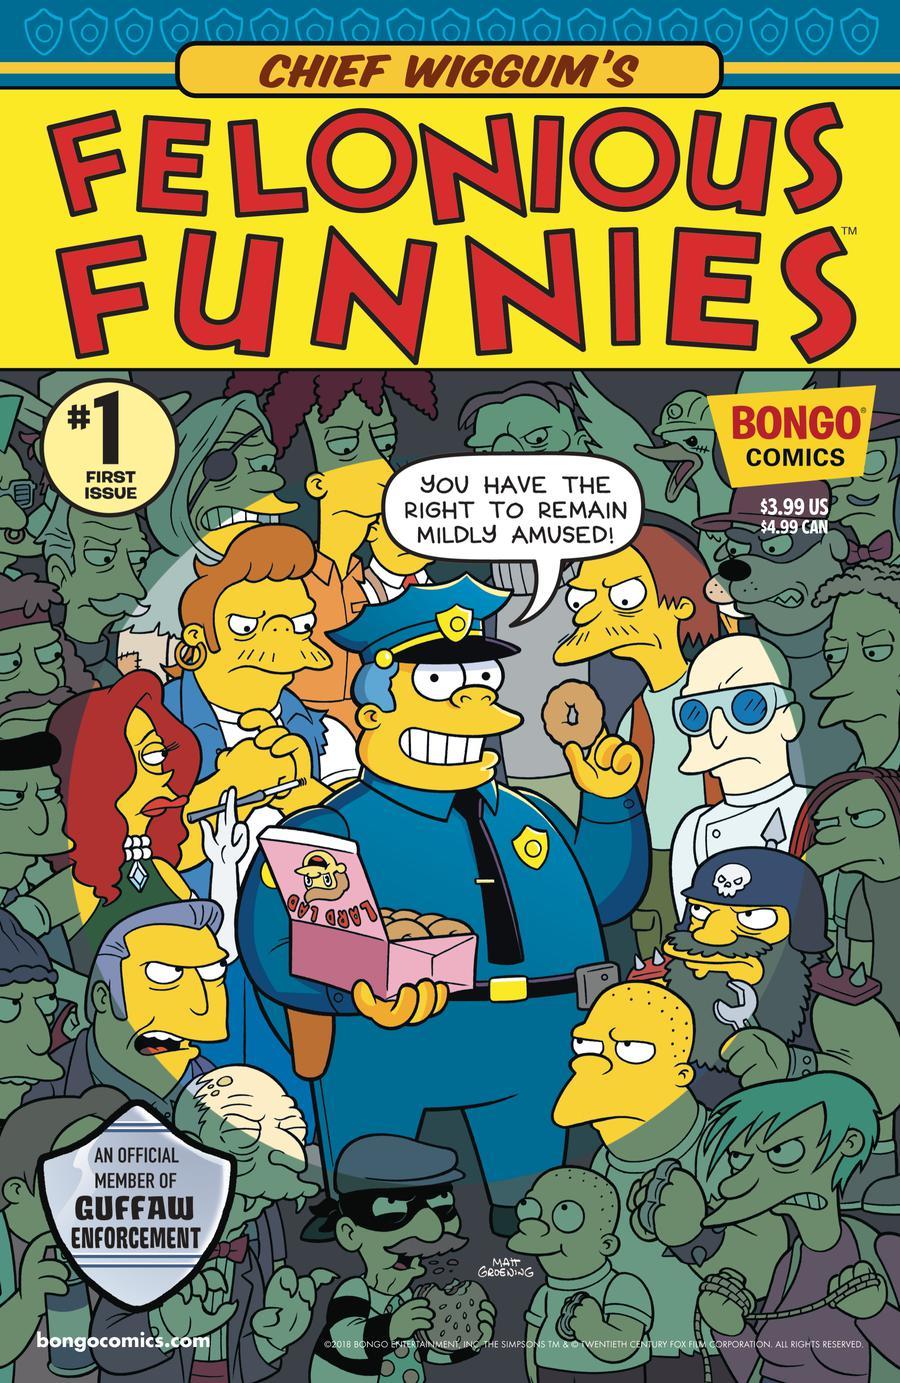 Chief Wiggums Felonious Funnies Vol. 1 #1